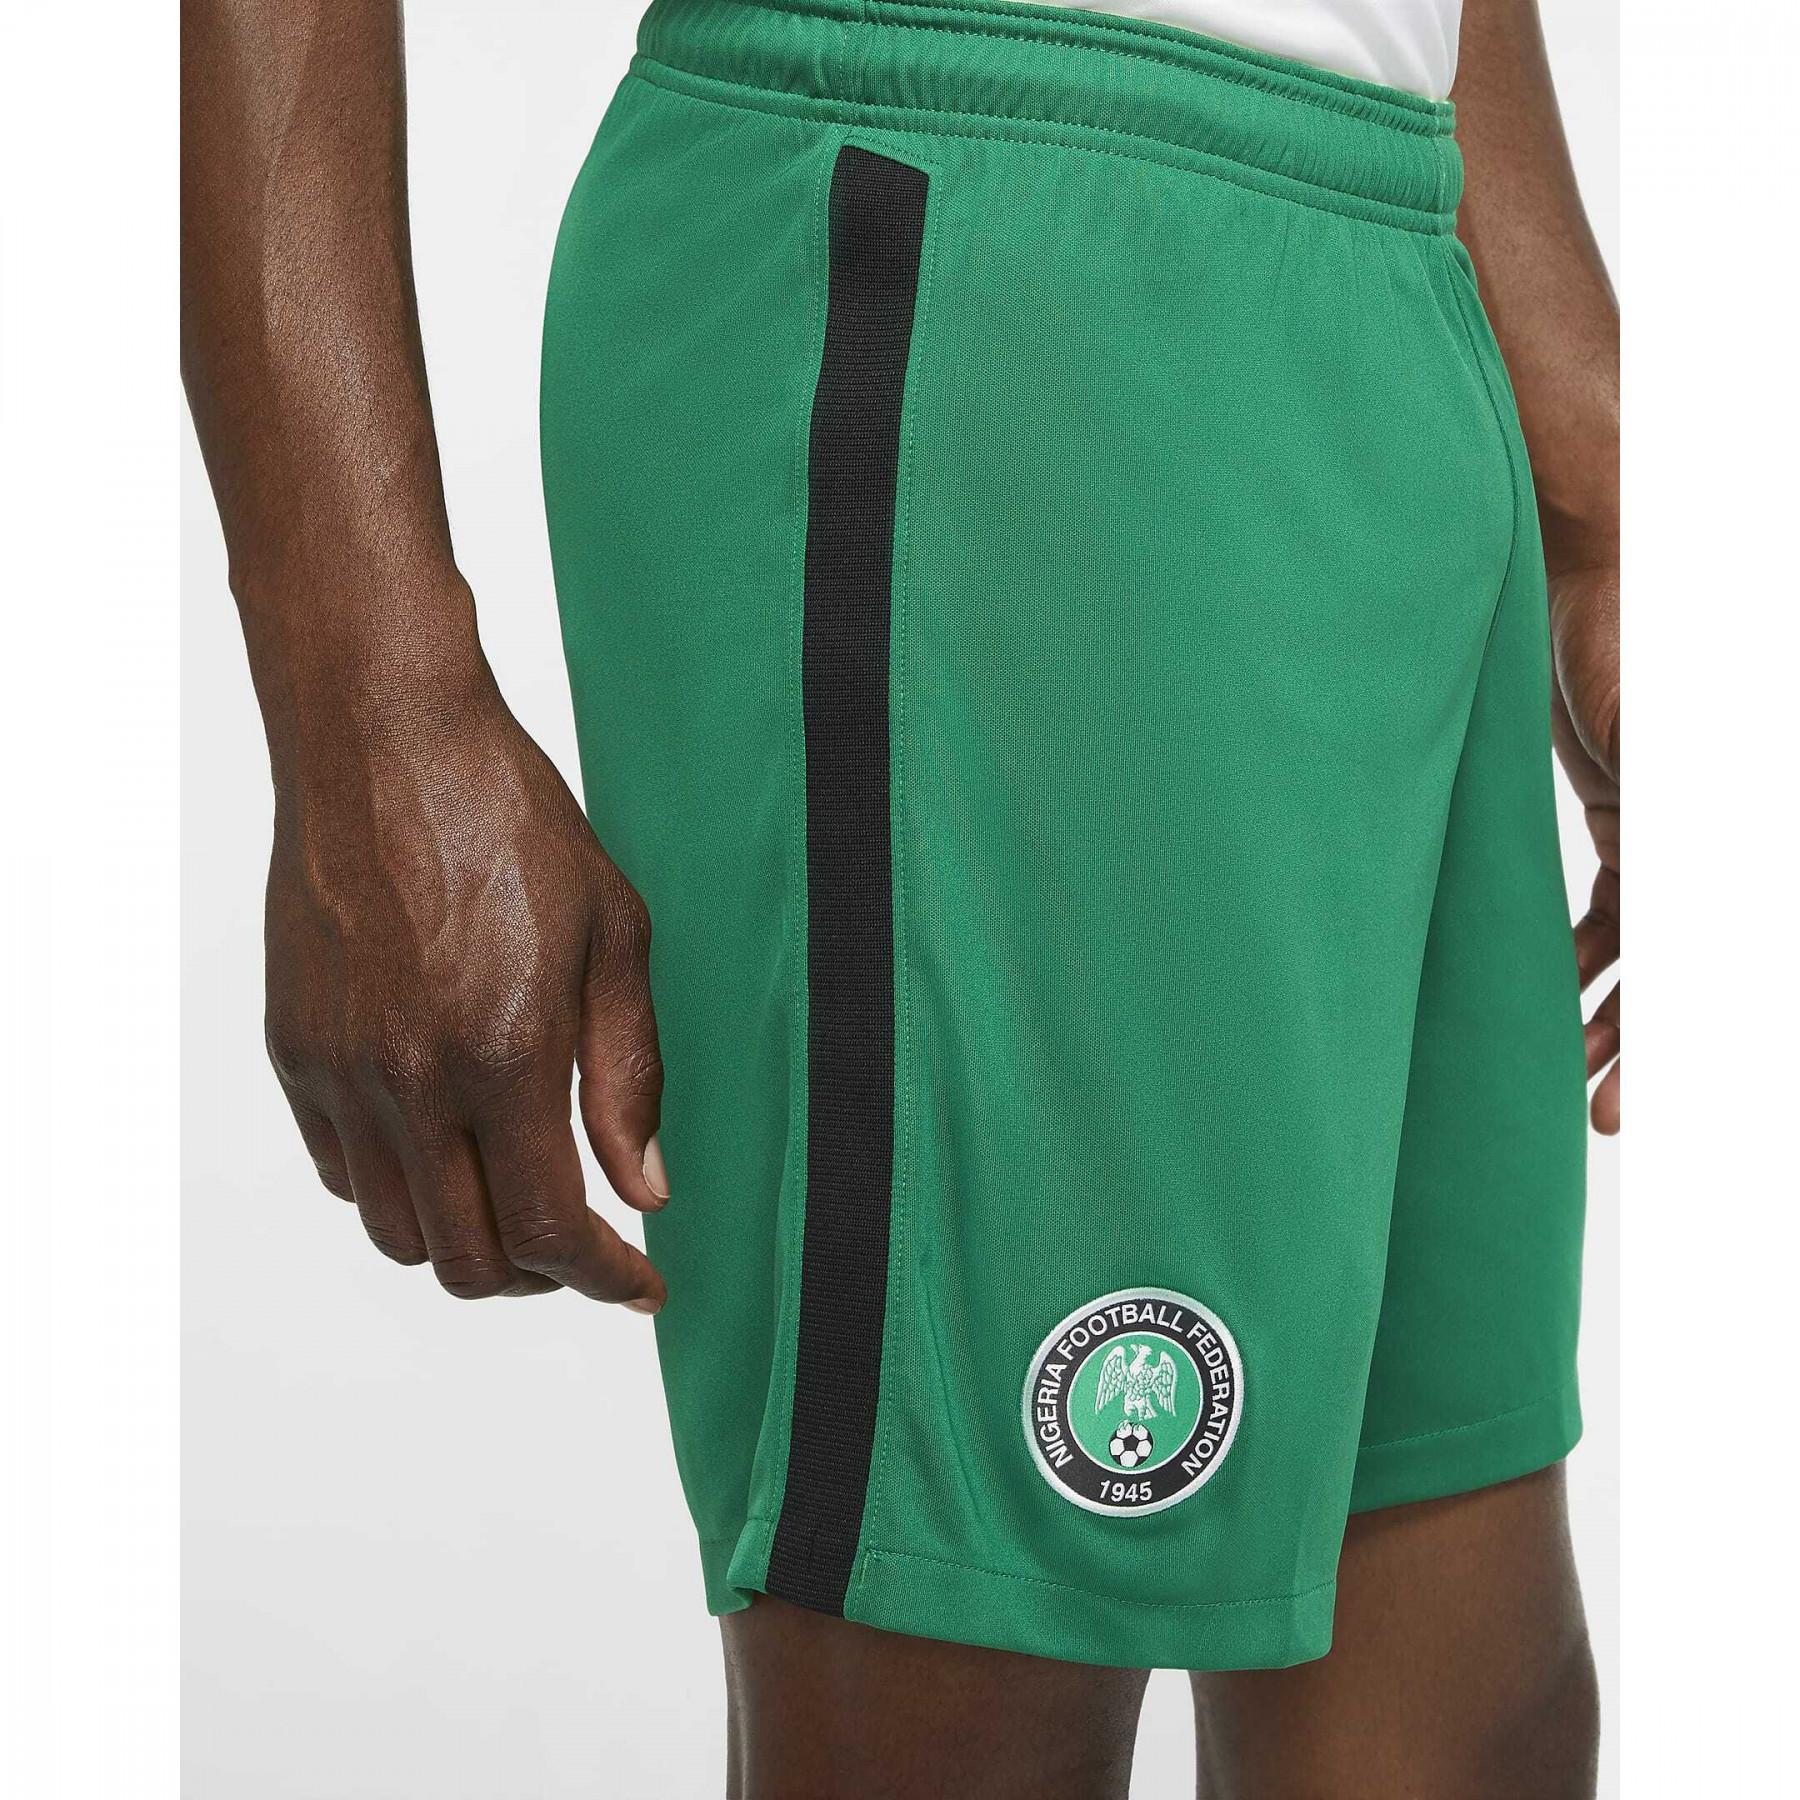 Home shorts Nigeria 2020